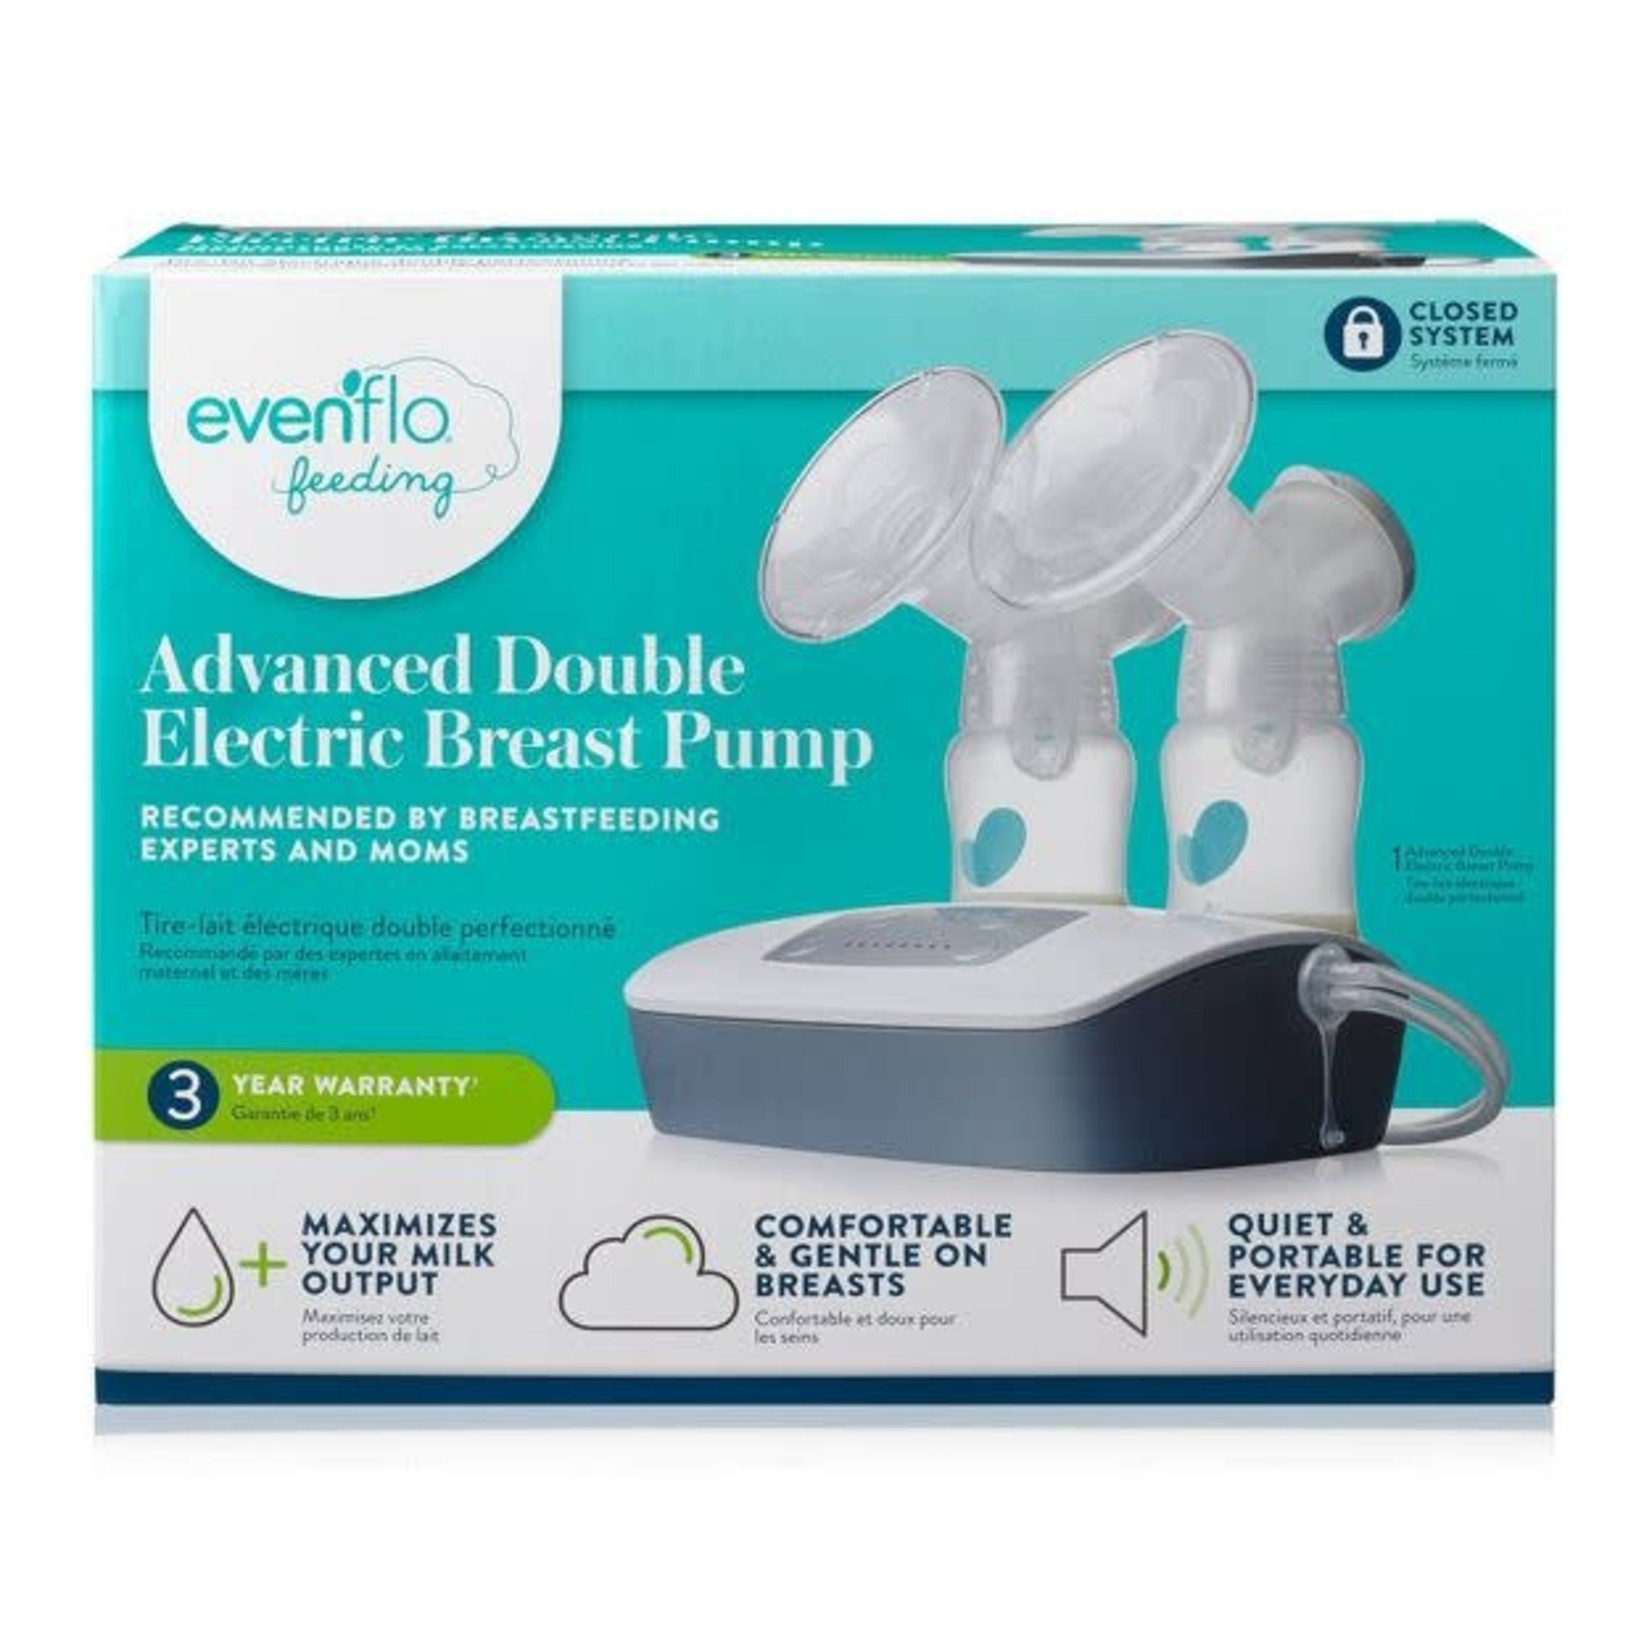 Evenflo Advanced Double Electric Breast Pump - Durable Health